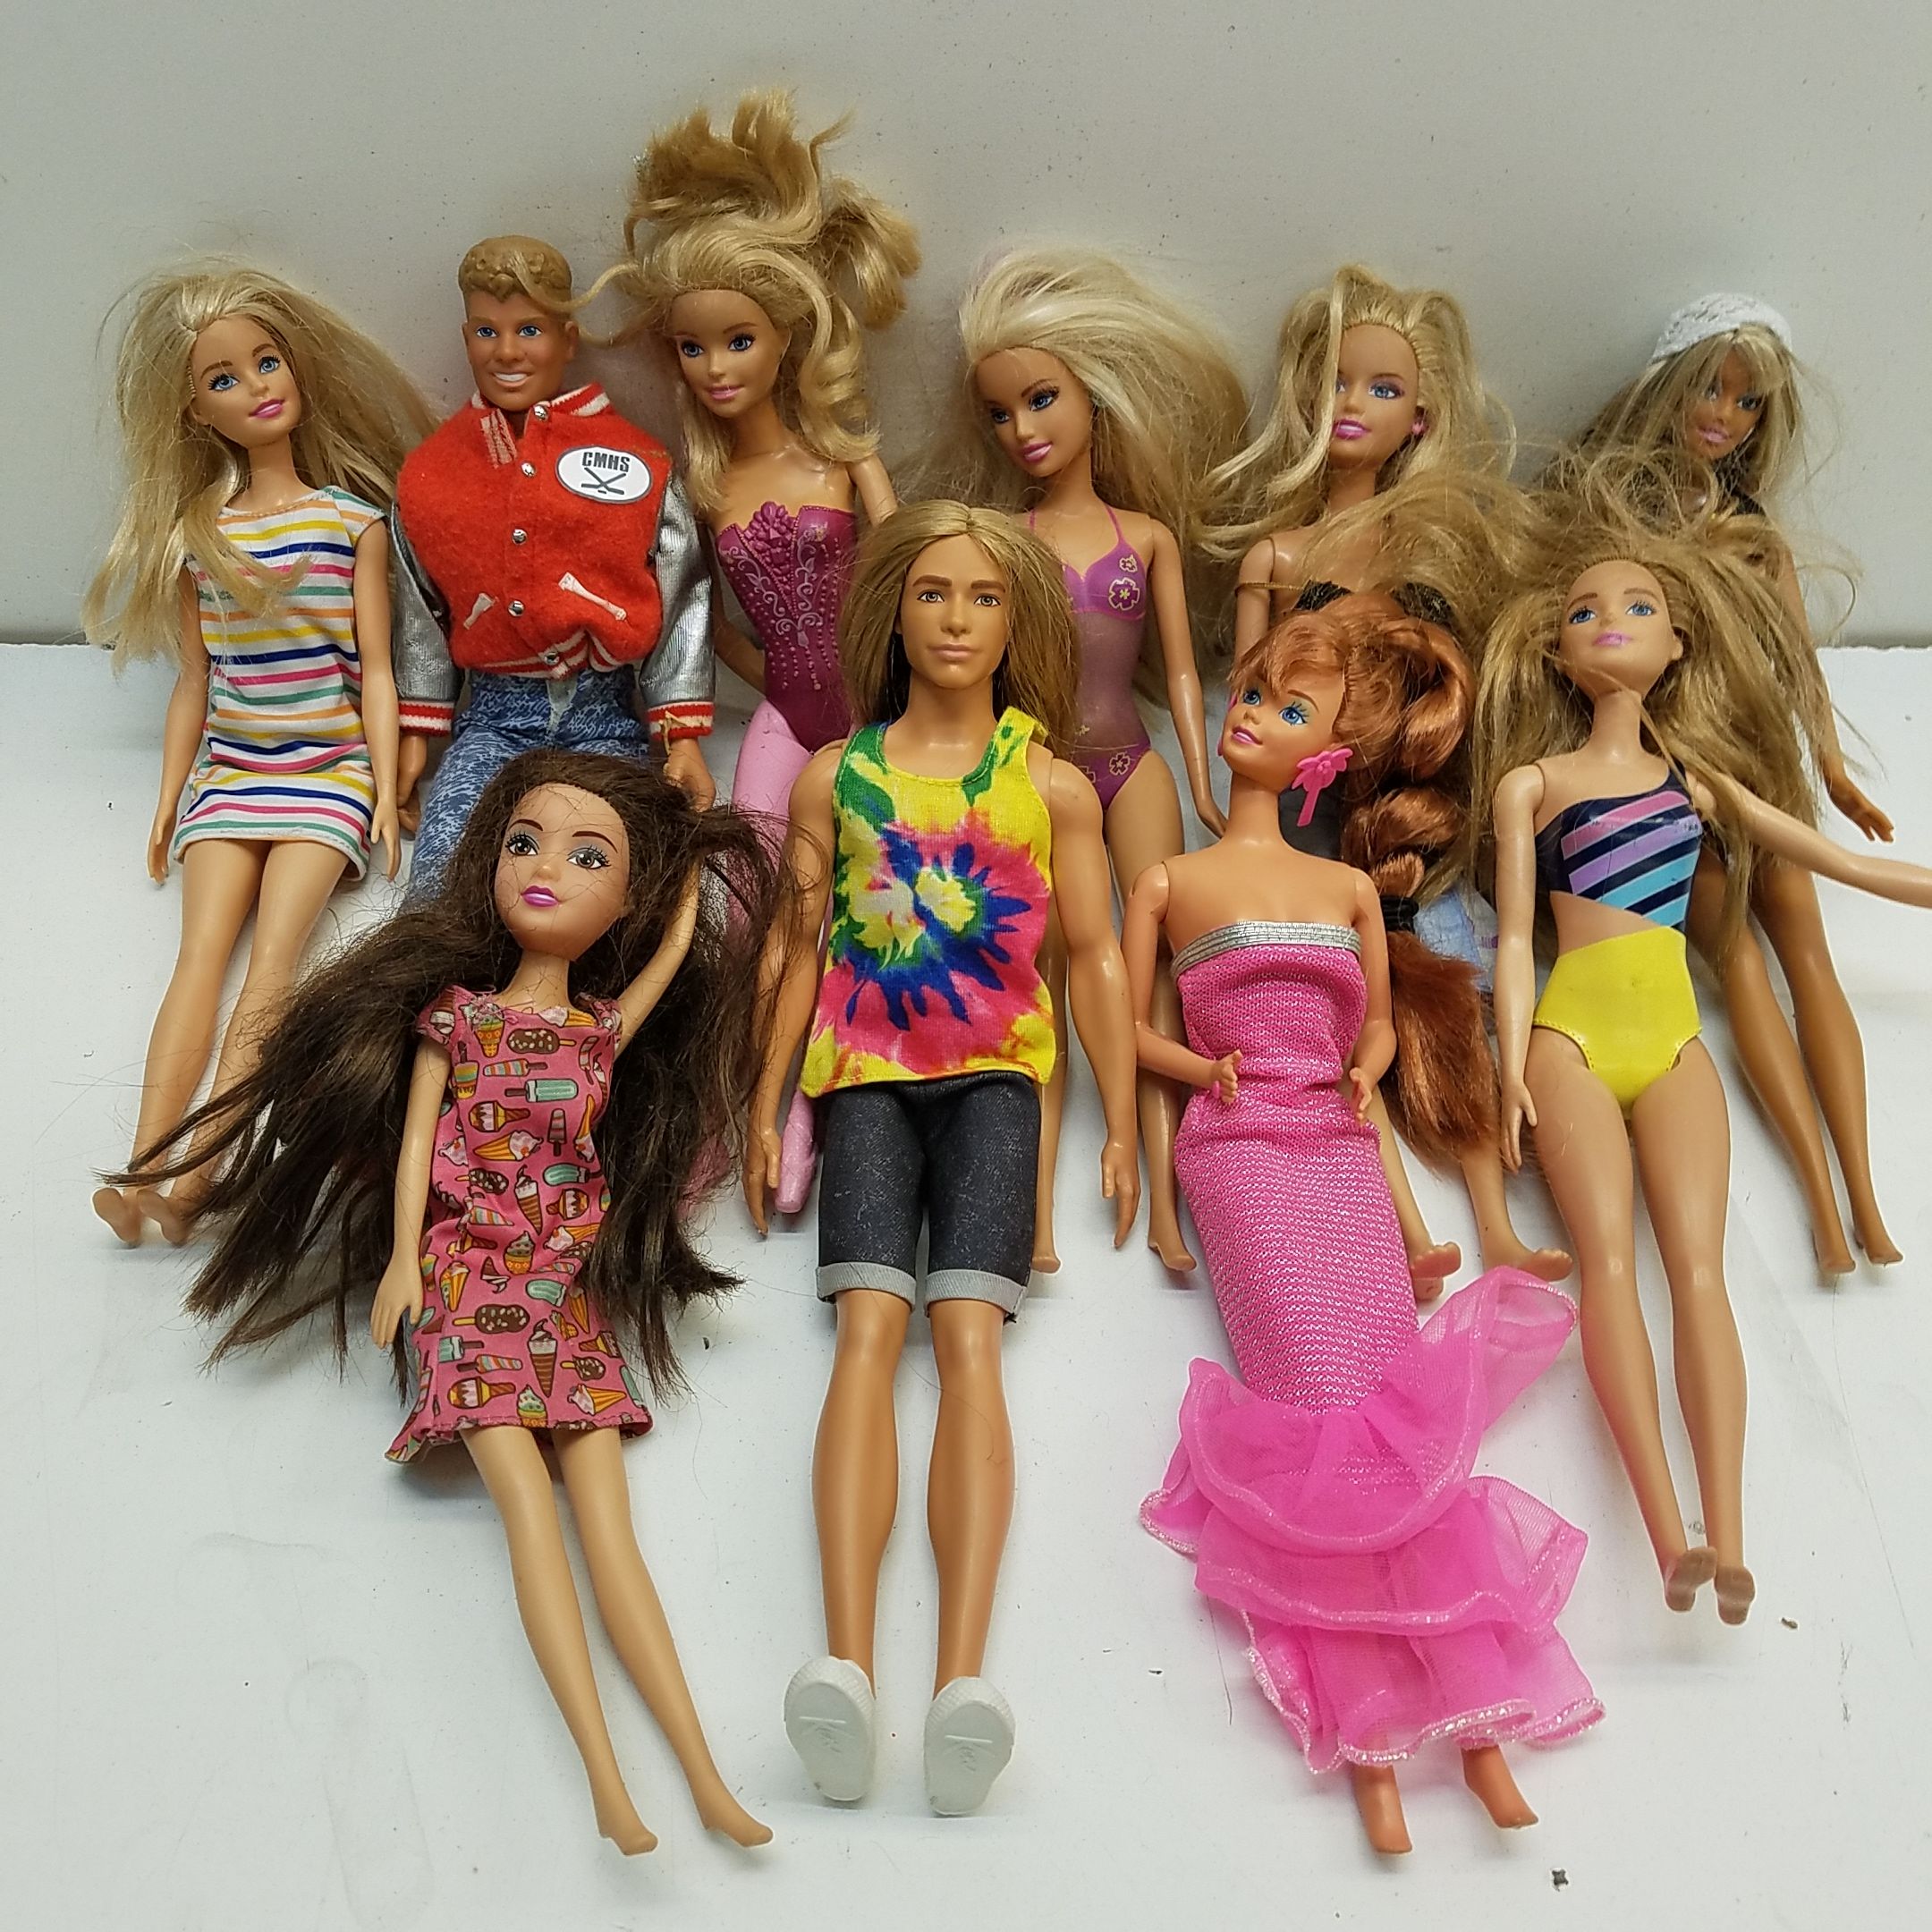 Buy the Bundle of 10 Assorted Mattel Barbie Dolls